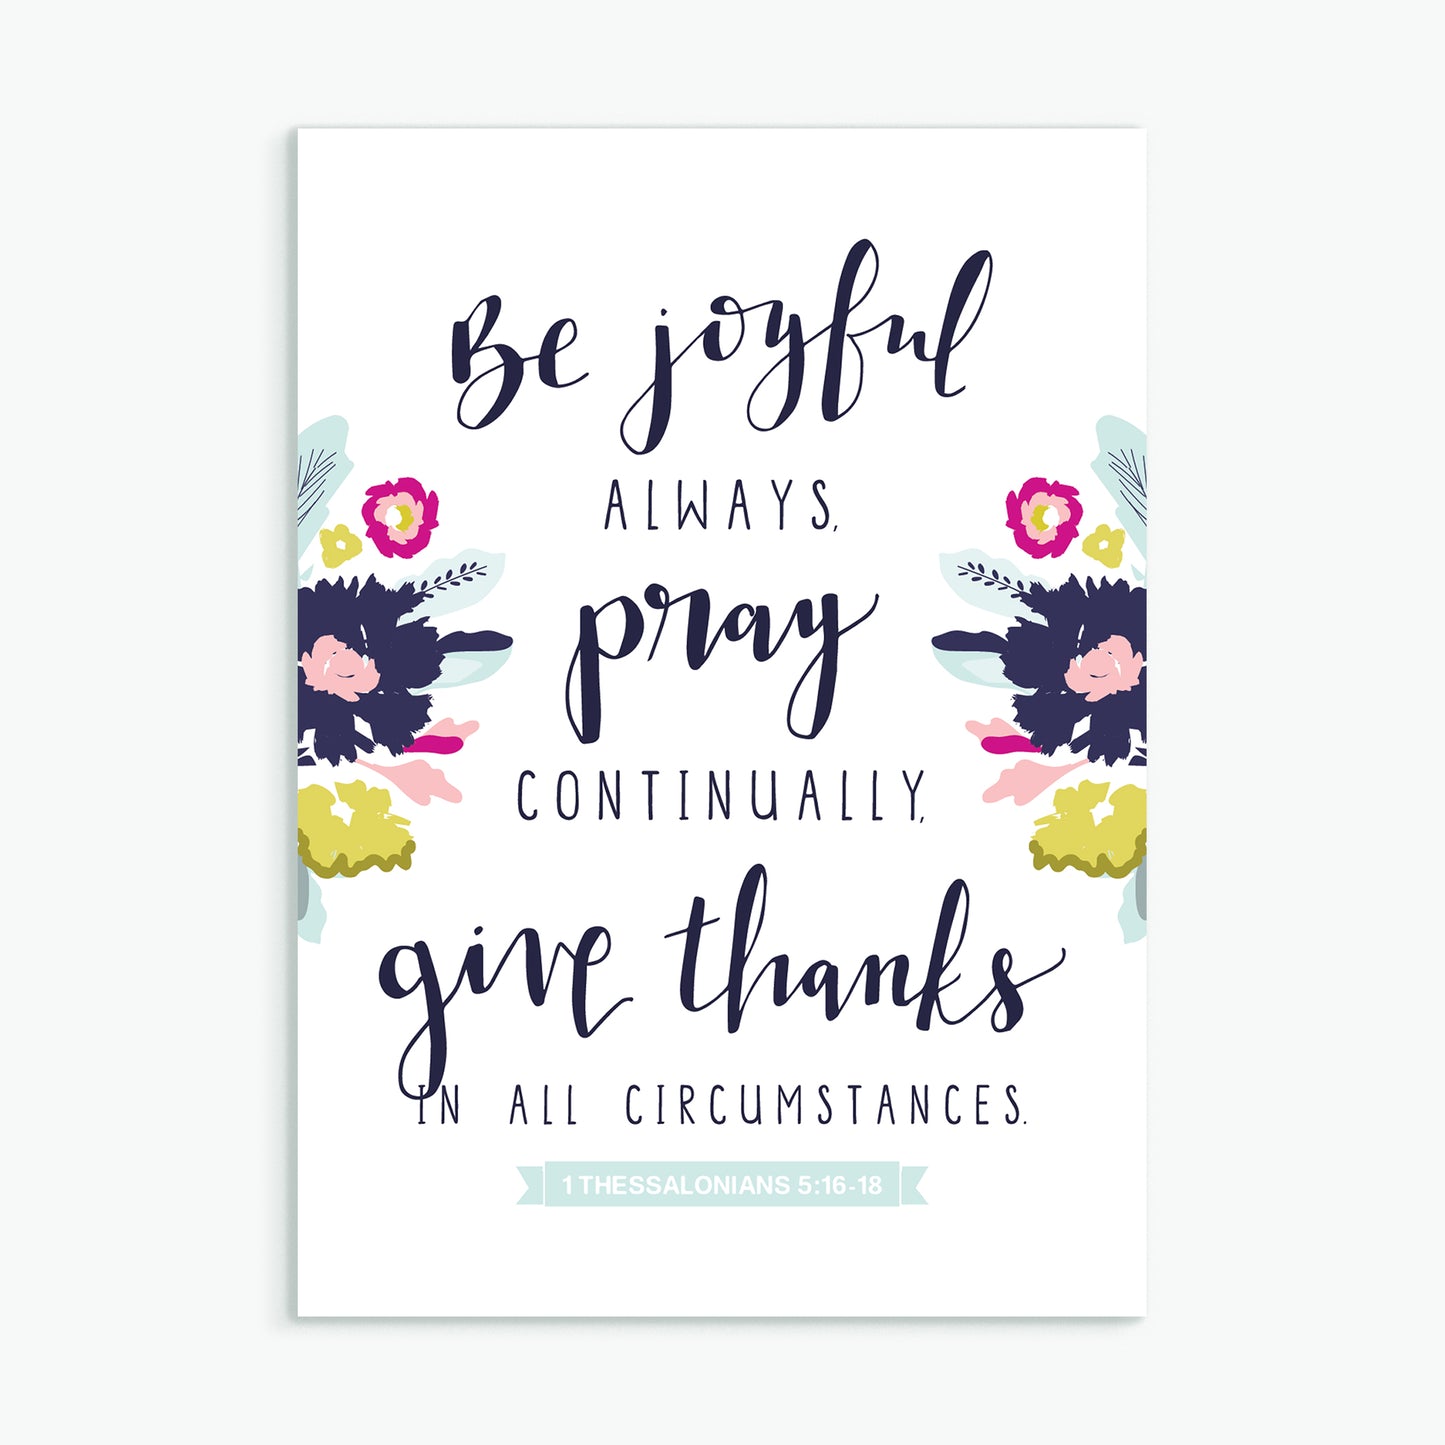 'Be Joyful Always' by Emily Burger - Greeting Card